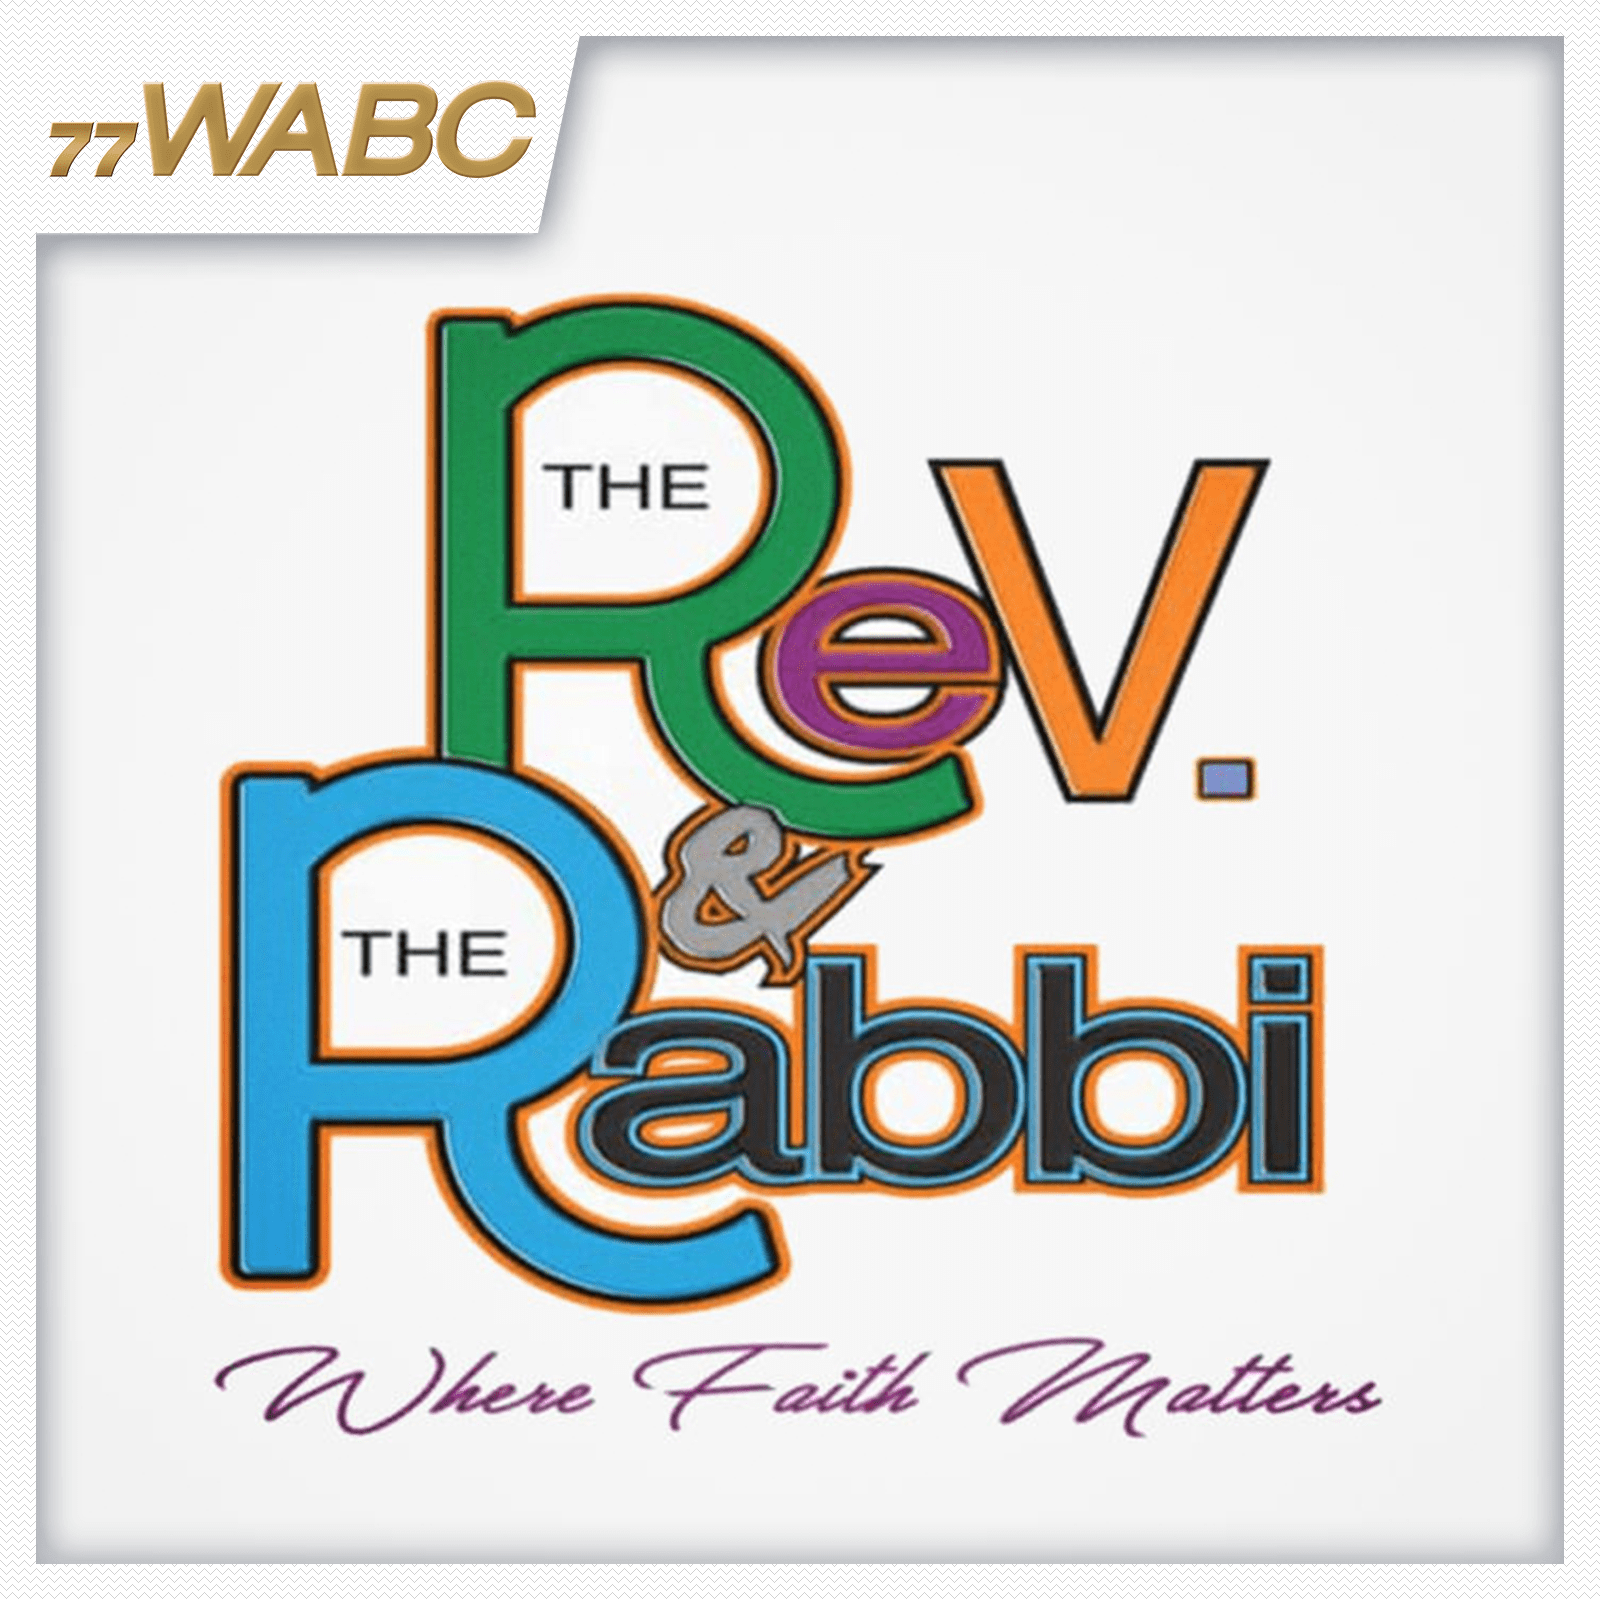 rev-and-the-rabbi-new-logo482894